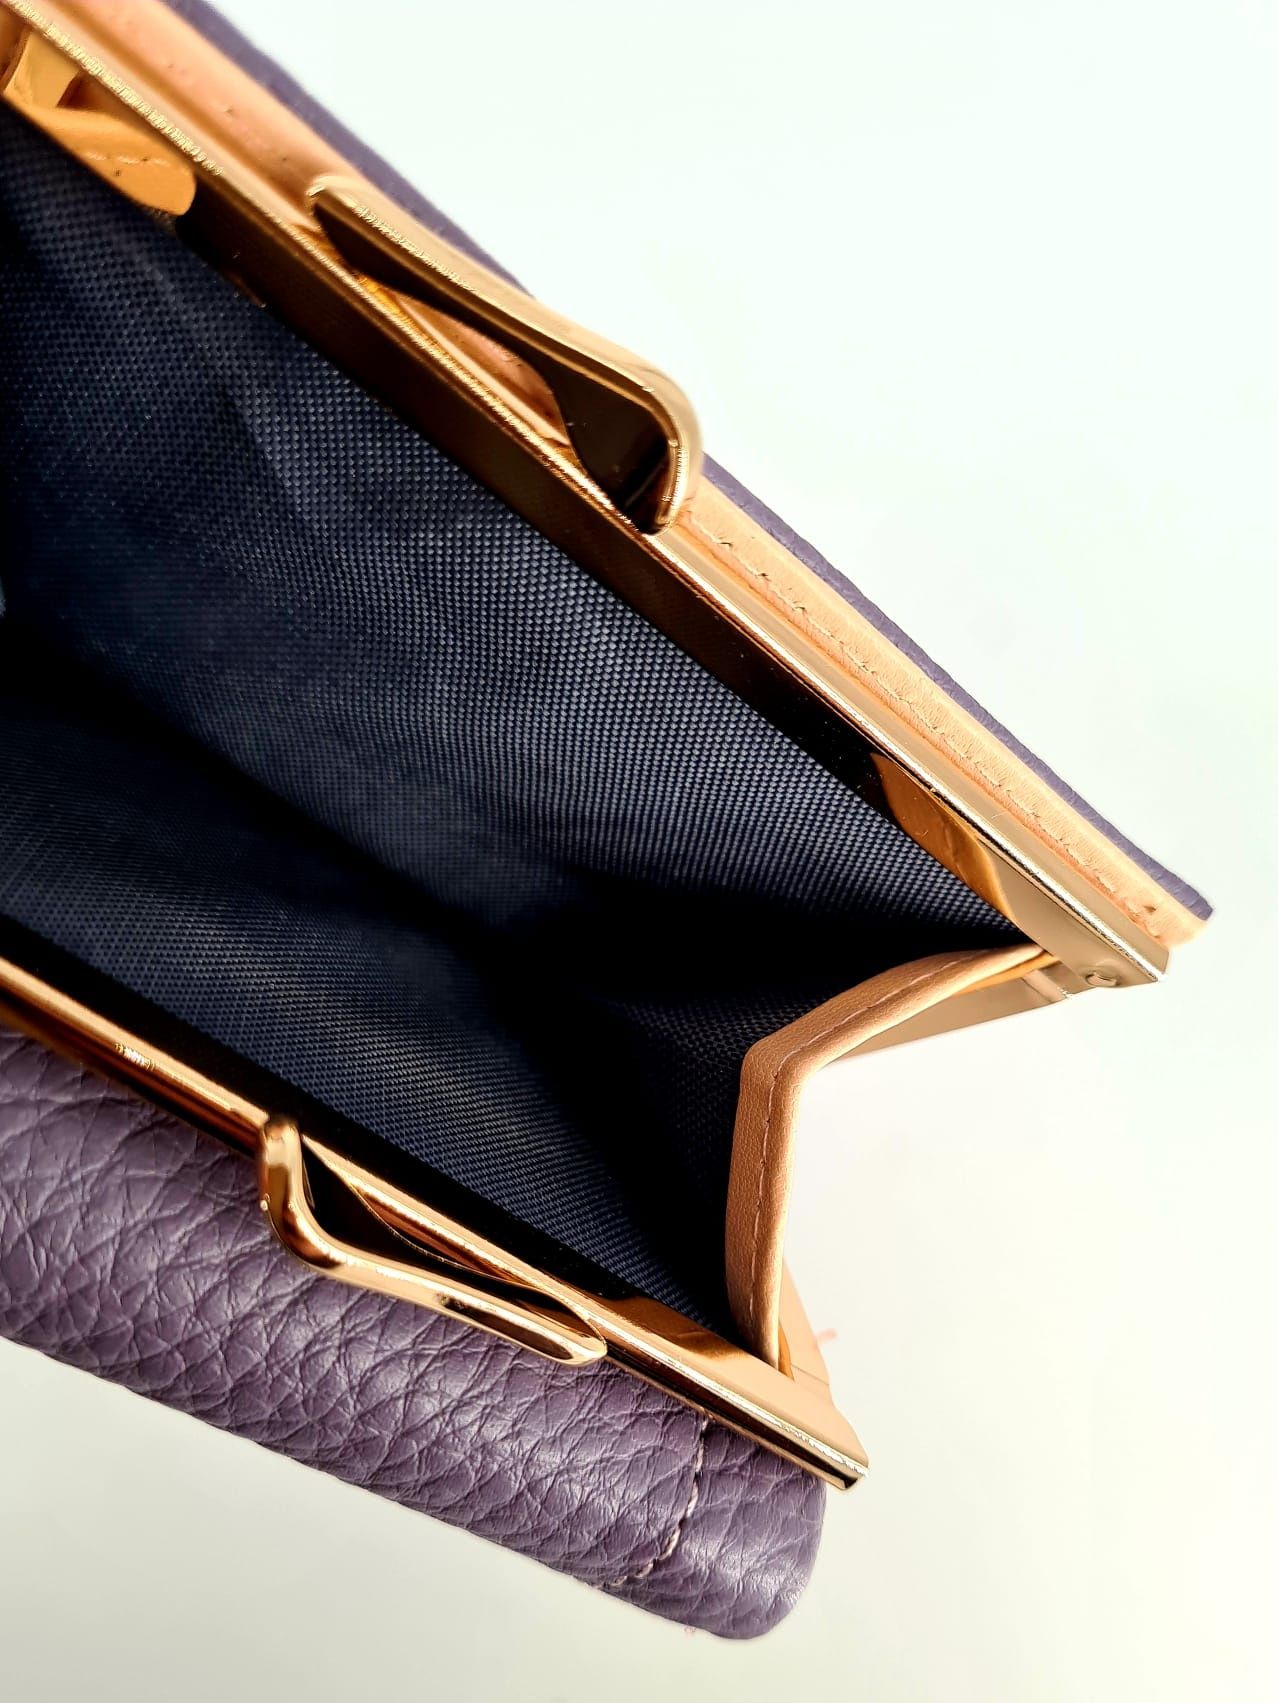 Piękny portfel damski jasny fiolet pastelowy nowy modny